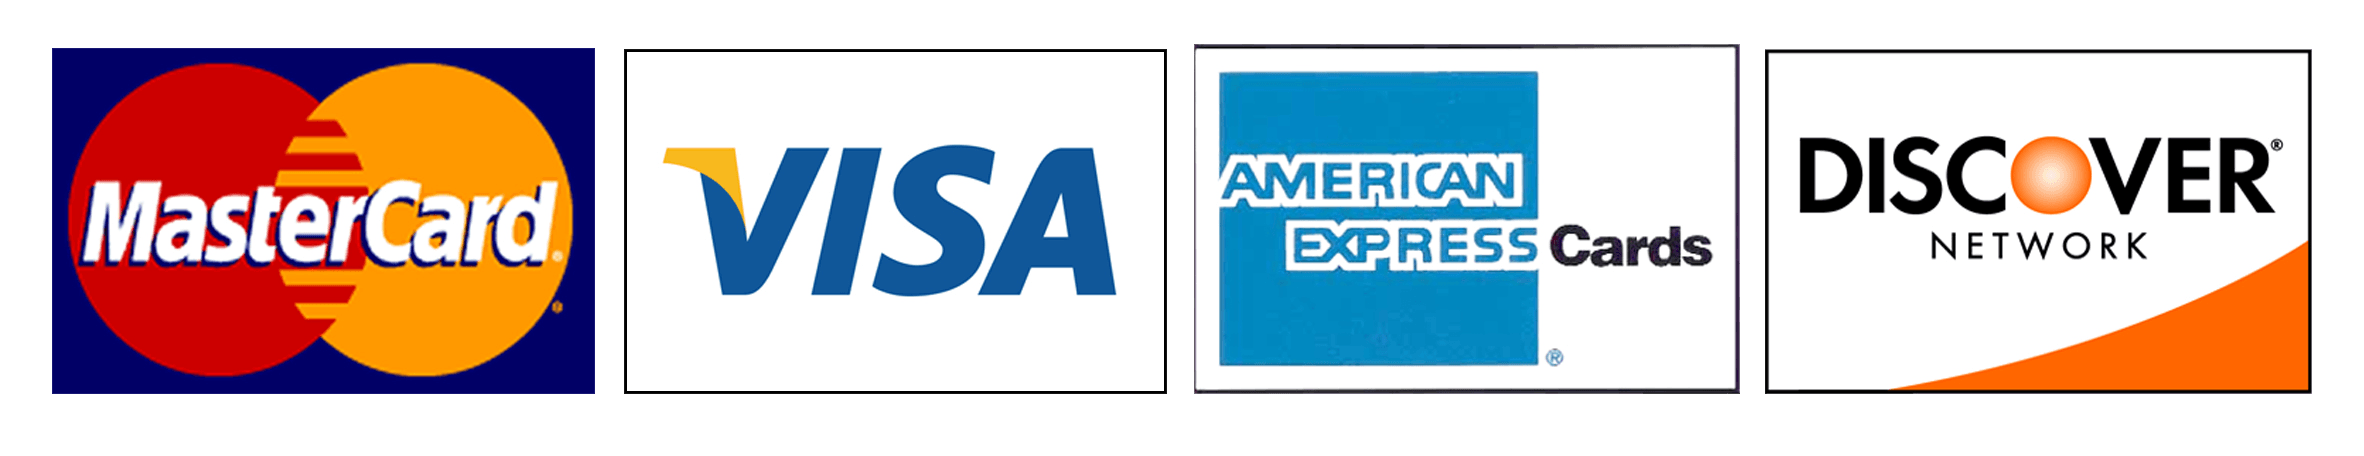 American Express Logo No Background